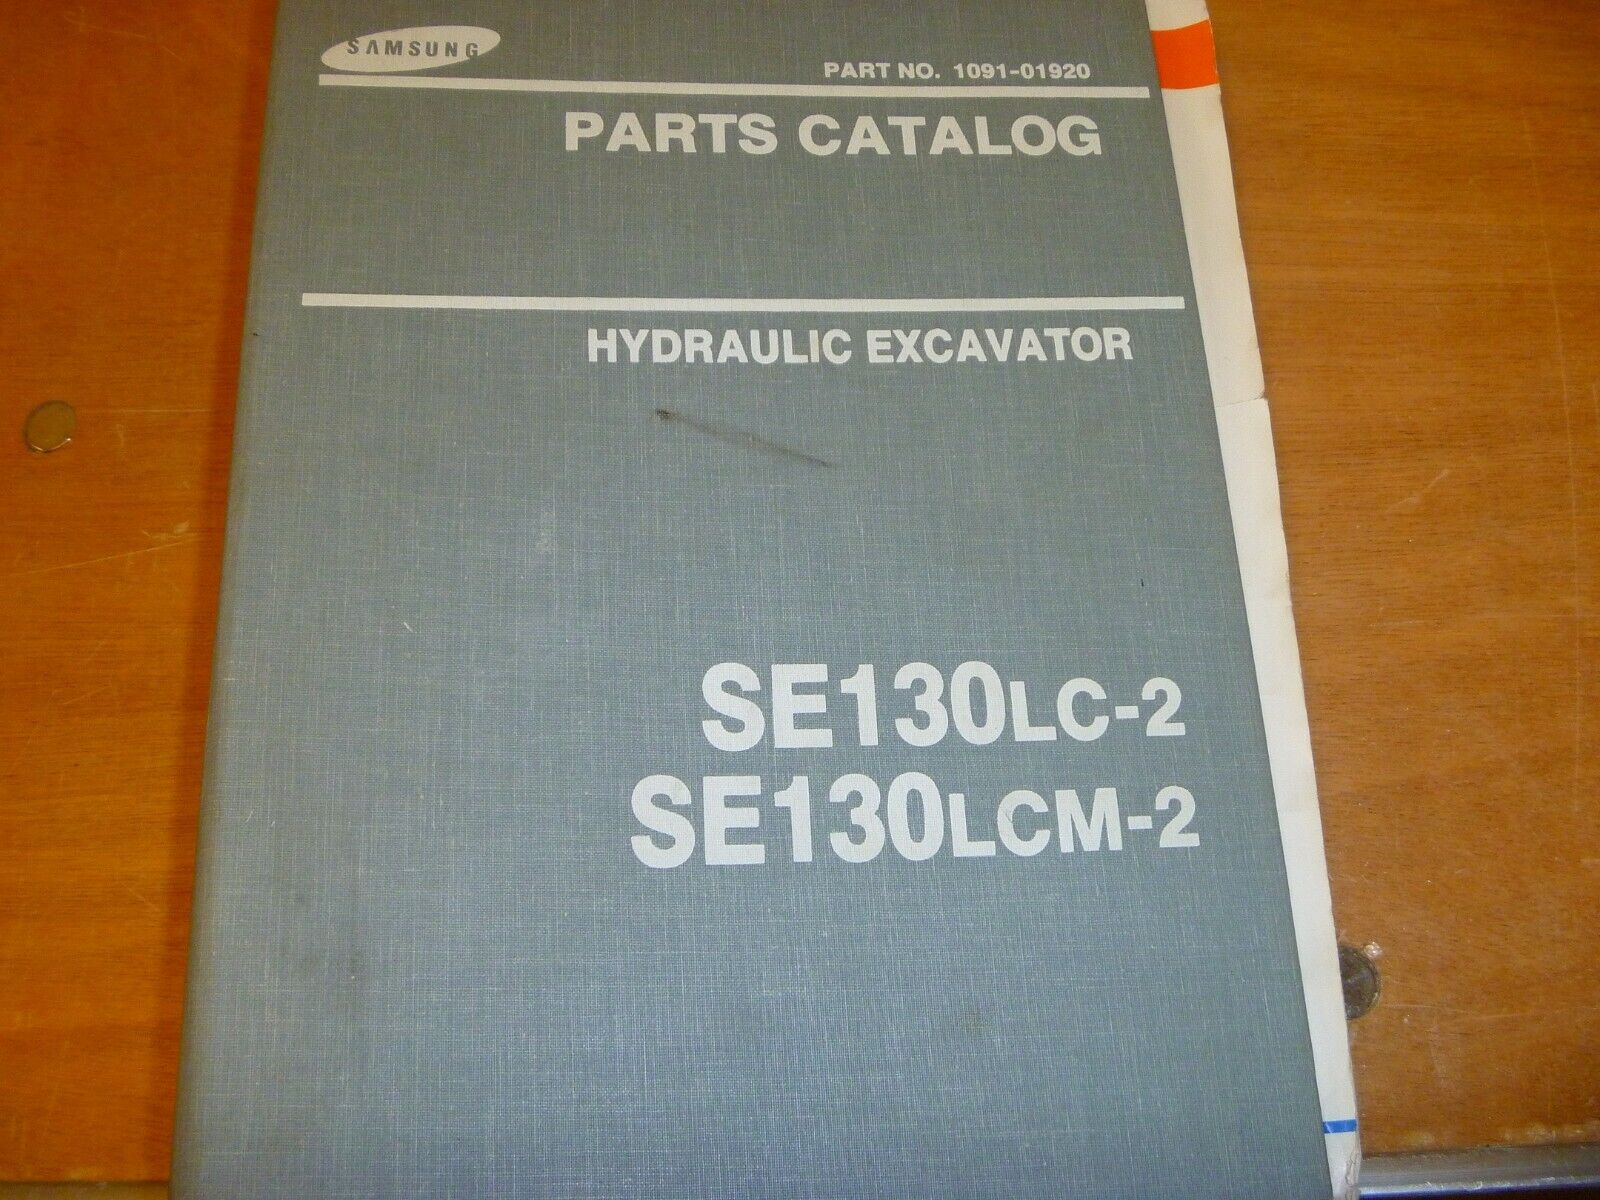 Samsung SE130LC-2 SE130LCM-2 Hydraulic Excavator Parts Catalog Manual 1091-01920